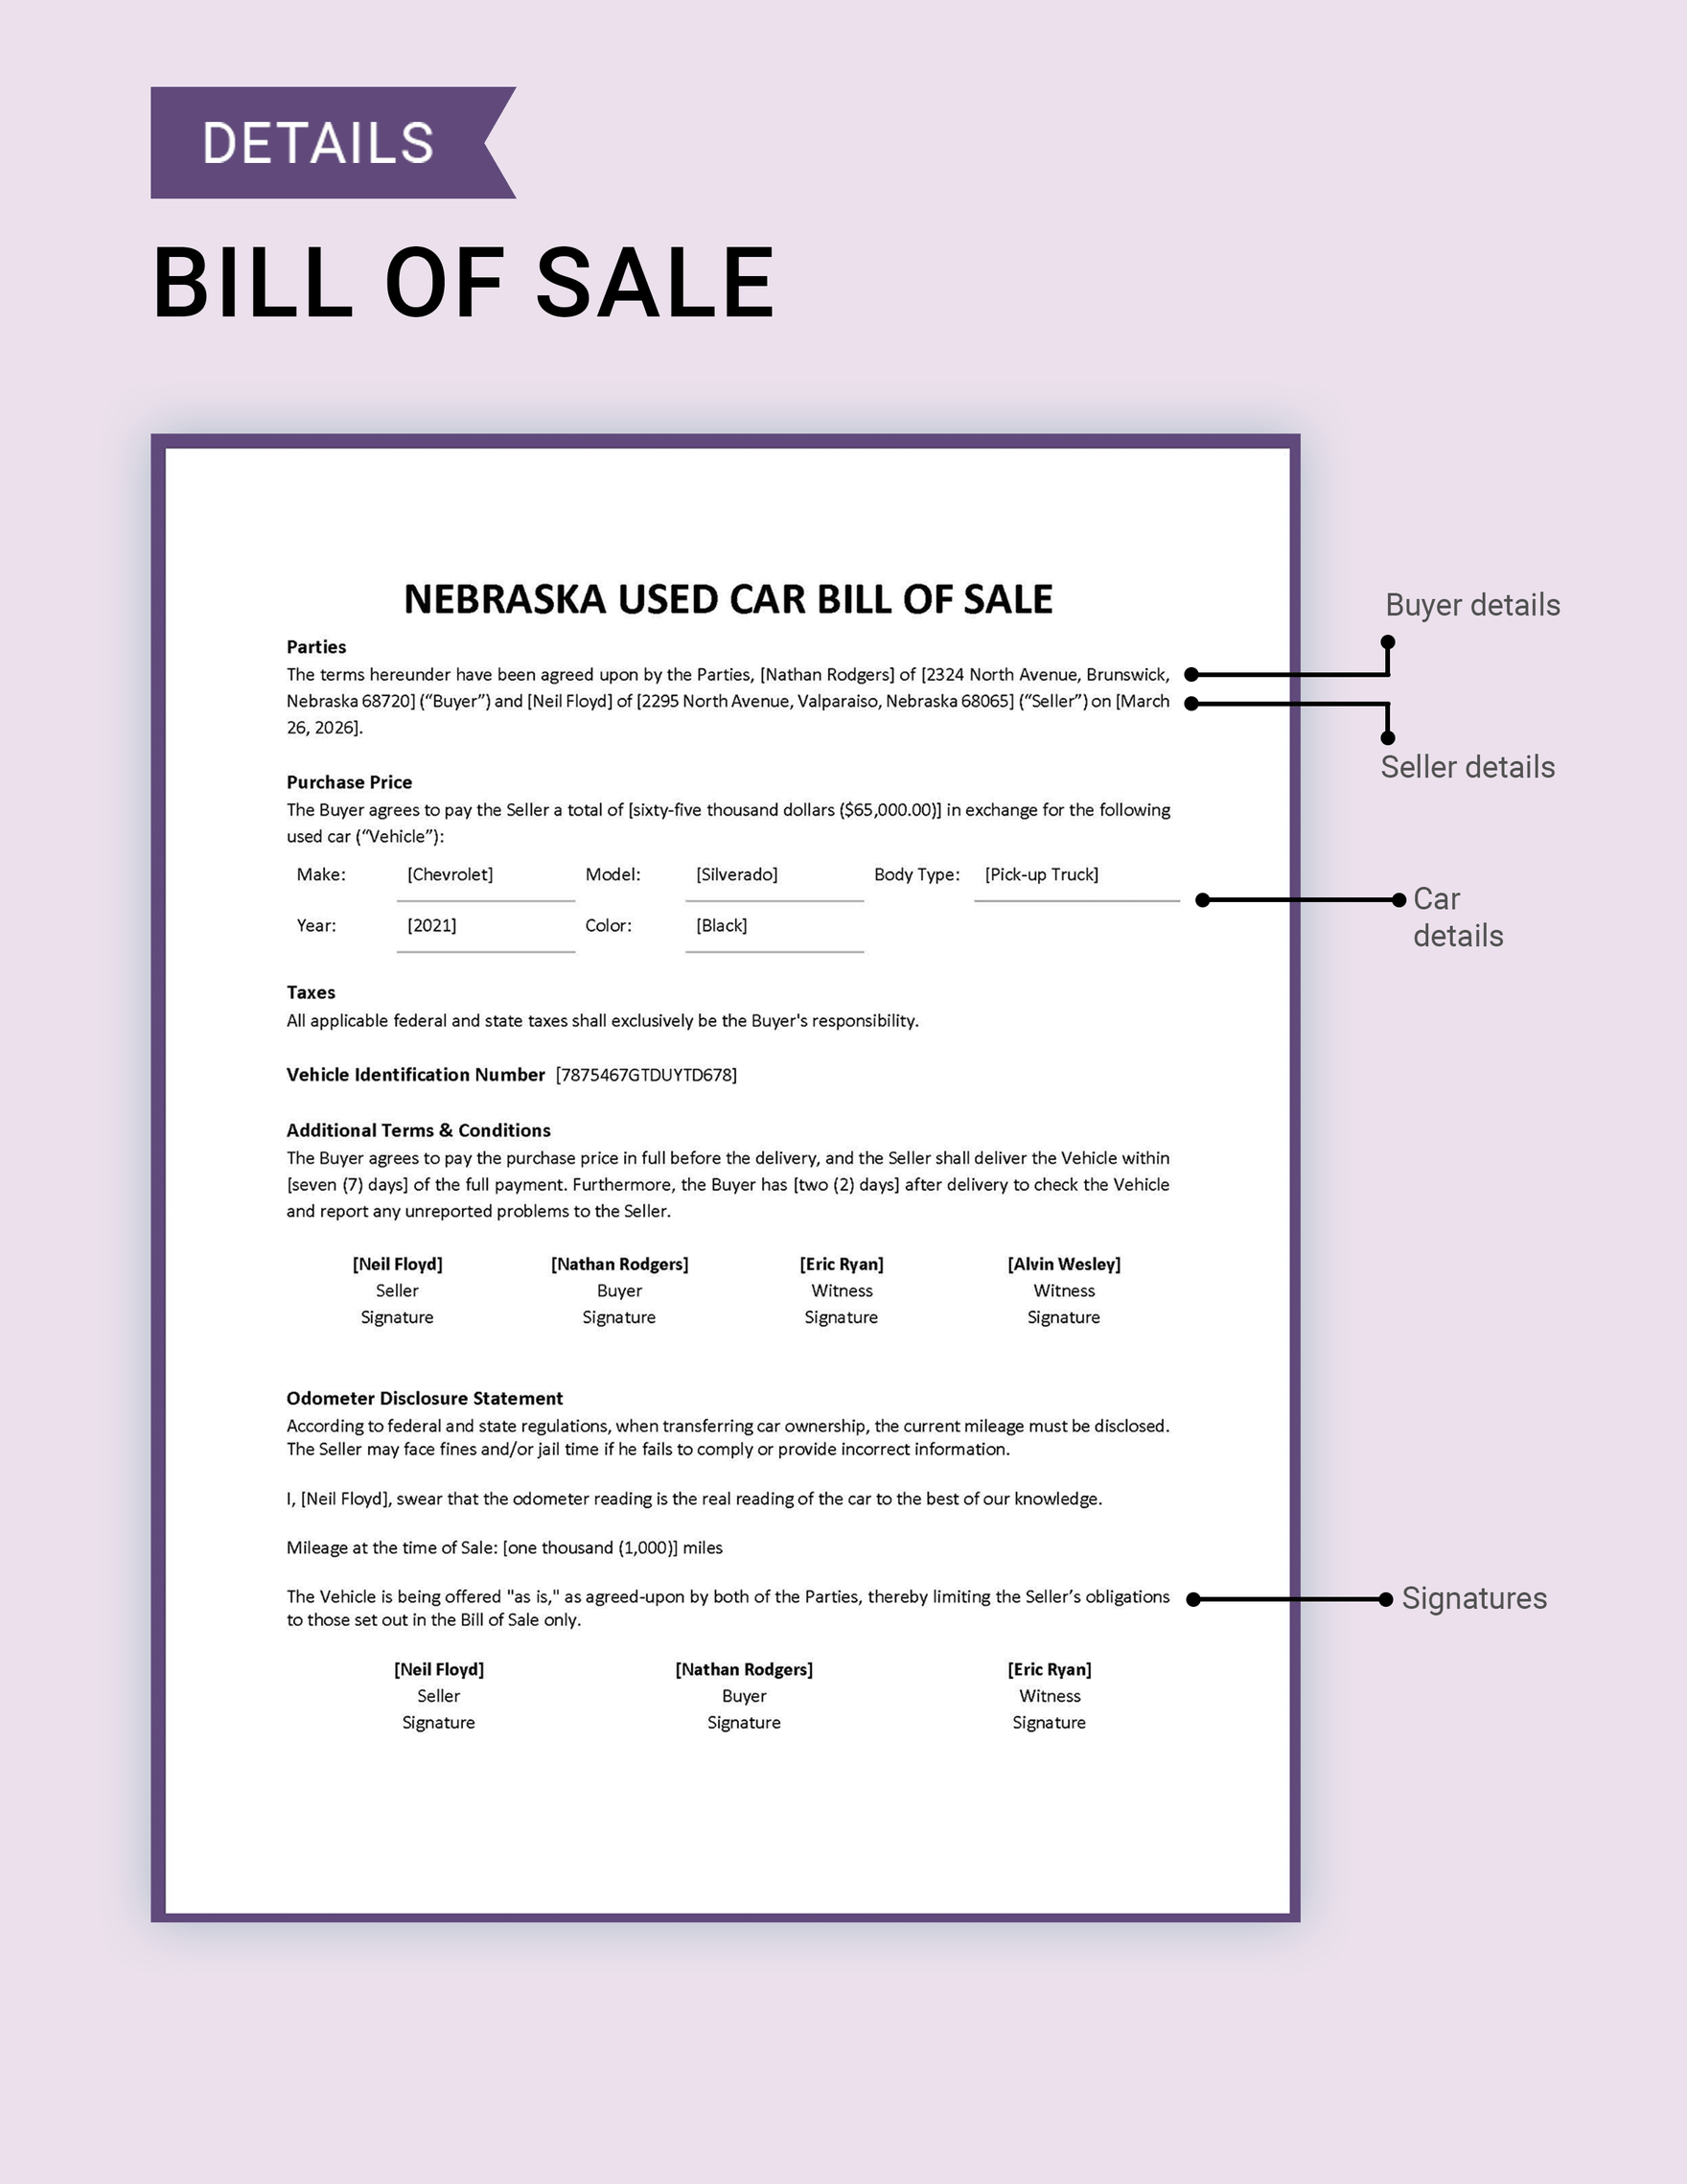 Nebraska Used Car Bill of Sale Template